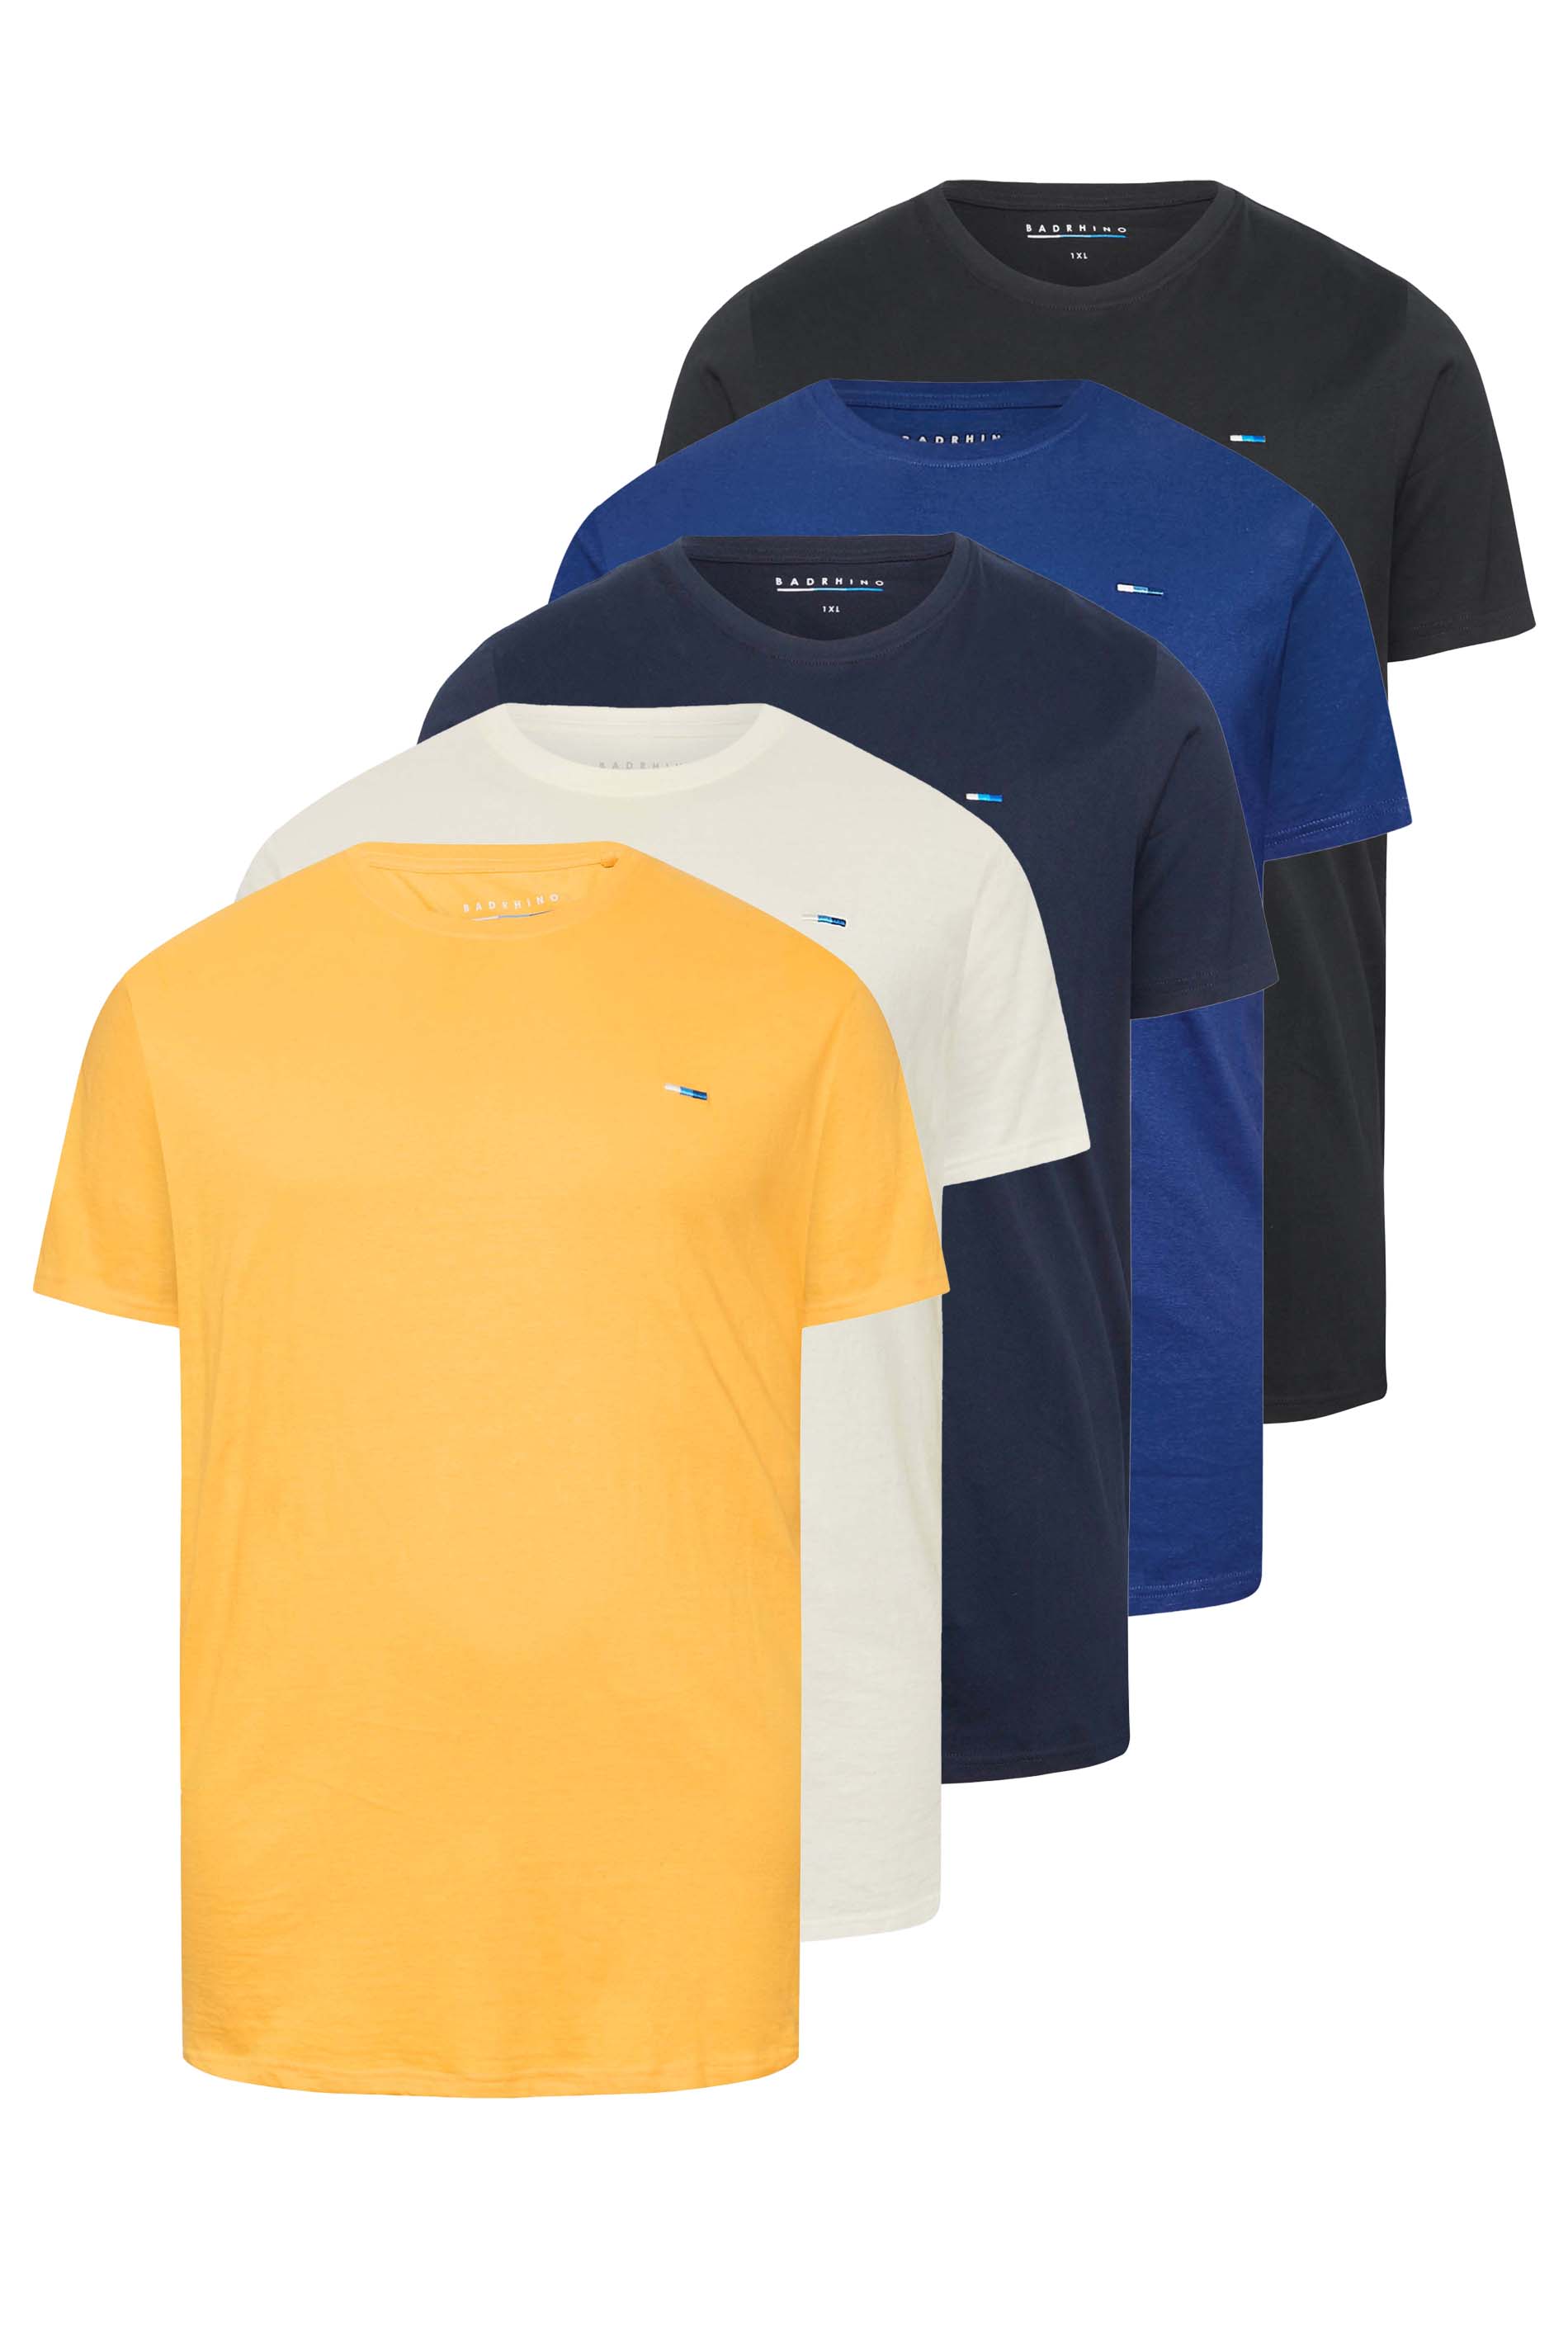 BadRhino For Less Black Assorted Lightweight 5 Pack T-Shirts | BadRhino 2